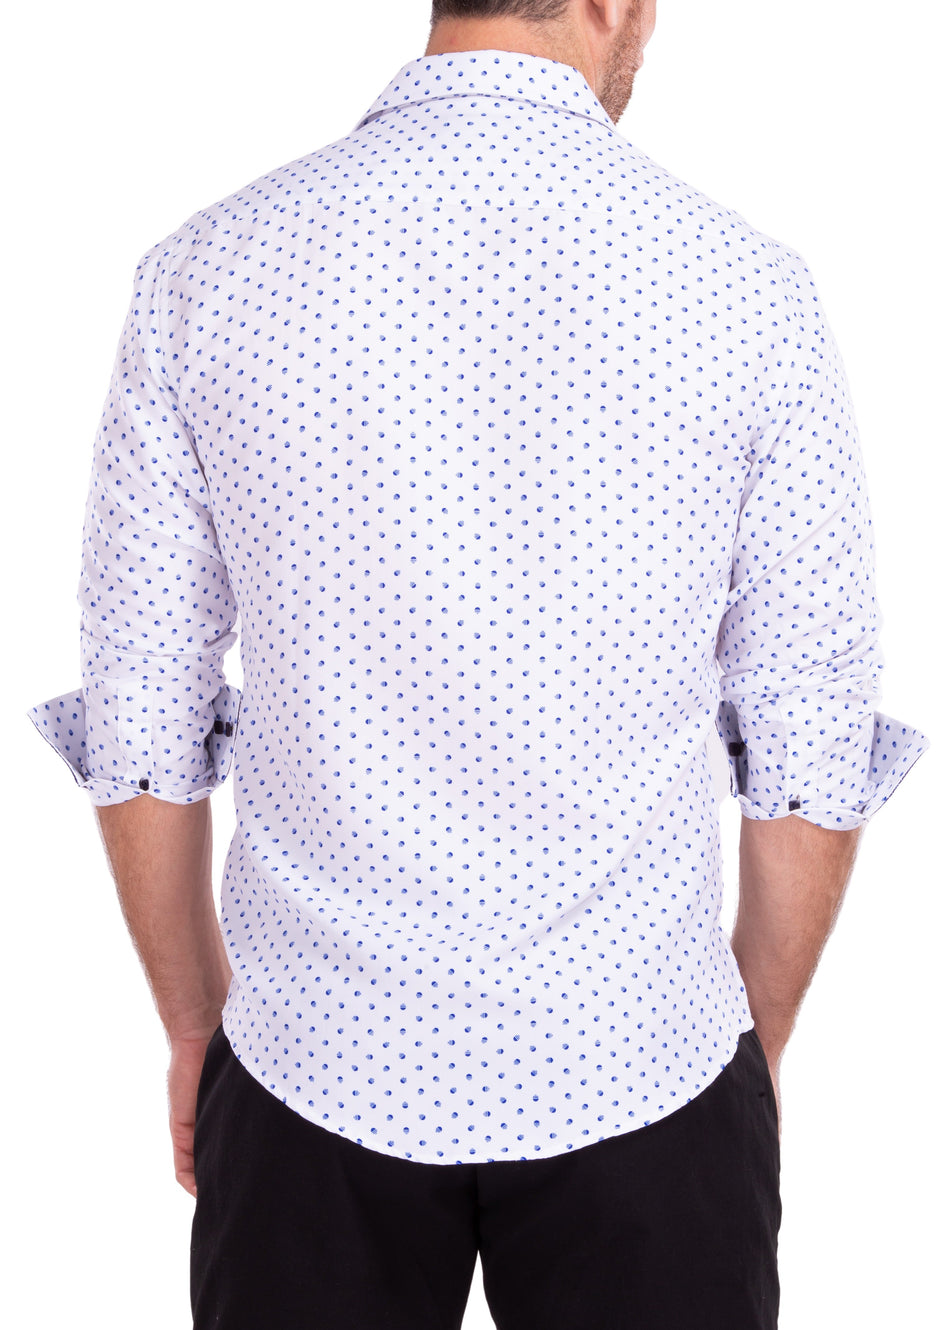 212312 - White Long Sleeve Shirt